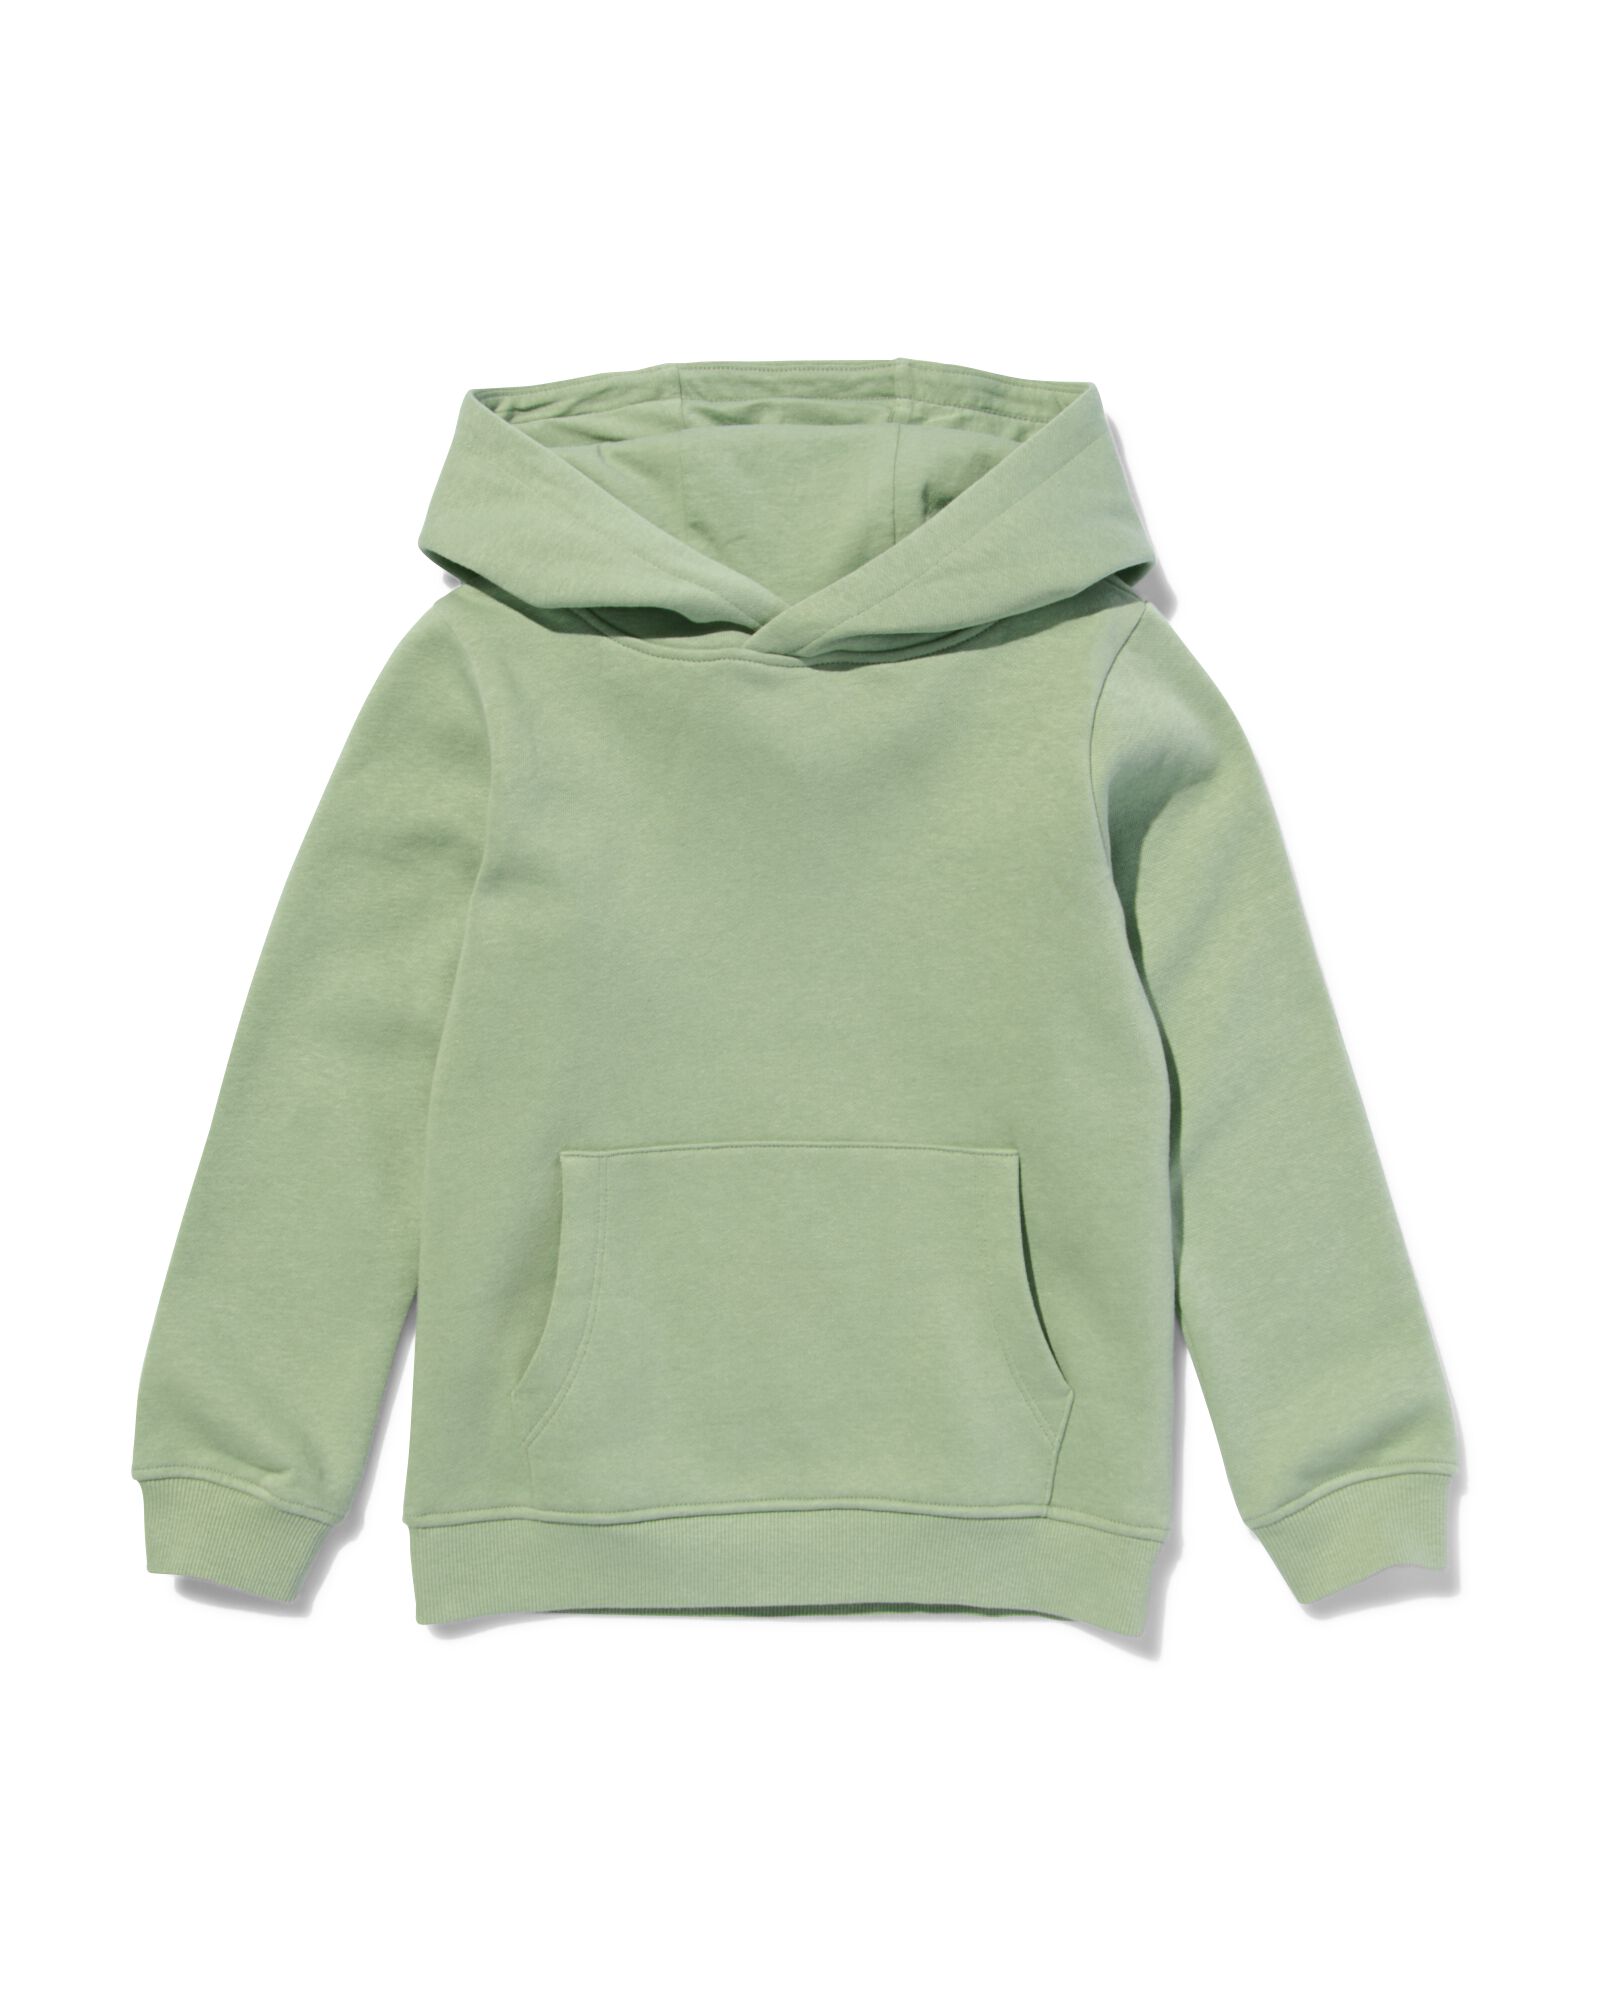 kinder hoodie met kangeroezak groen 110/116 - 30769429 - HEMA